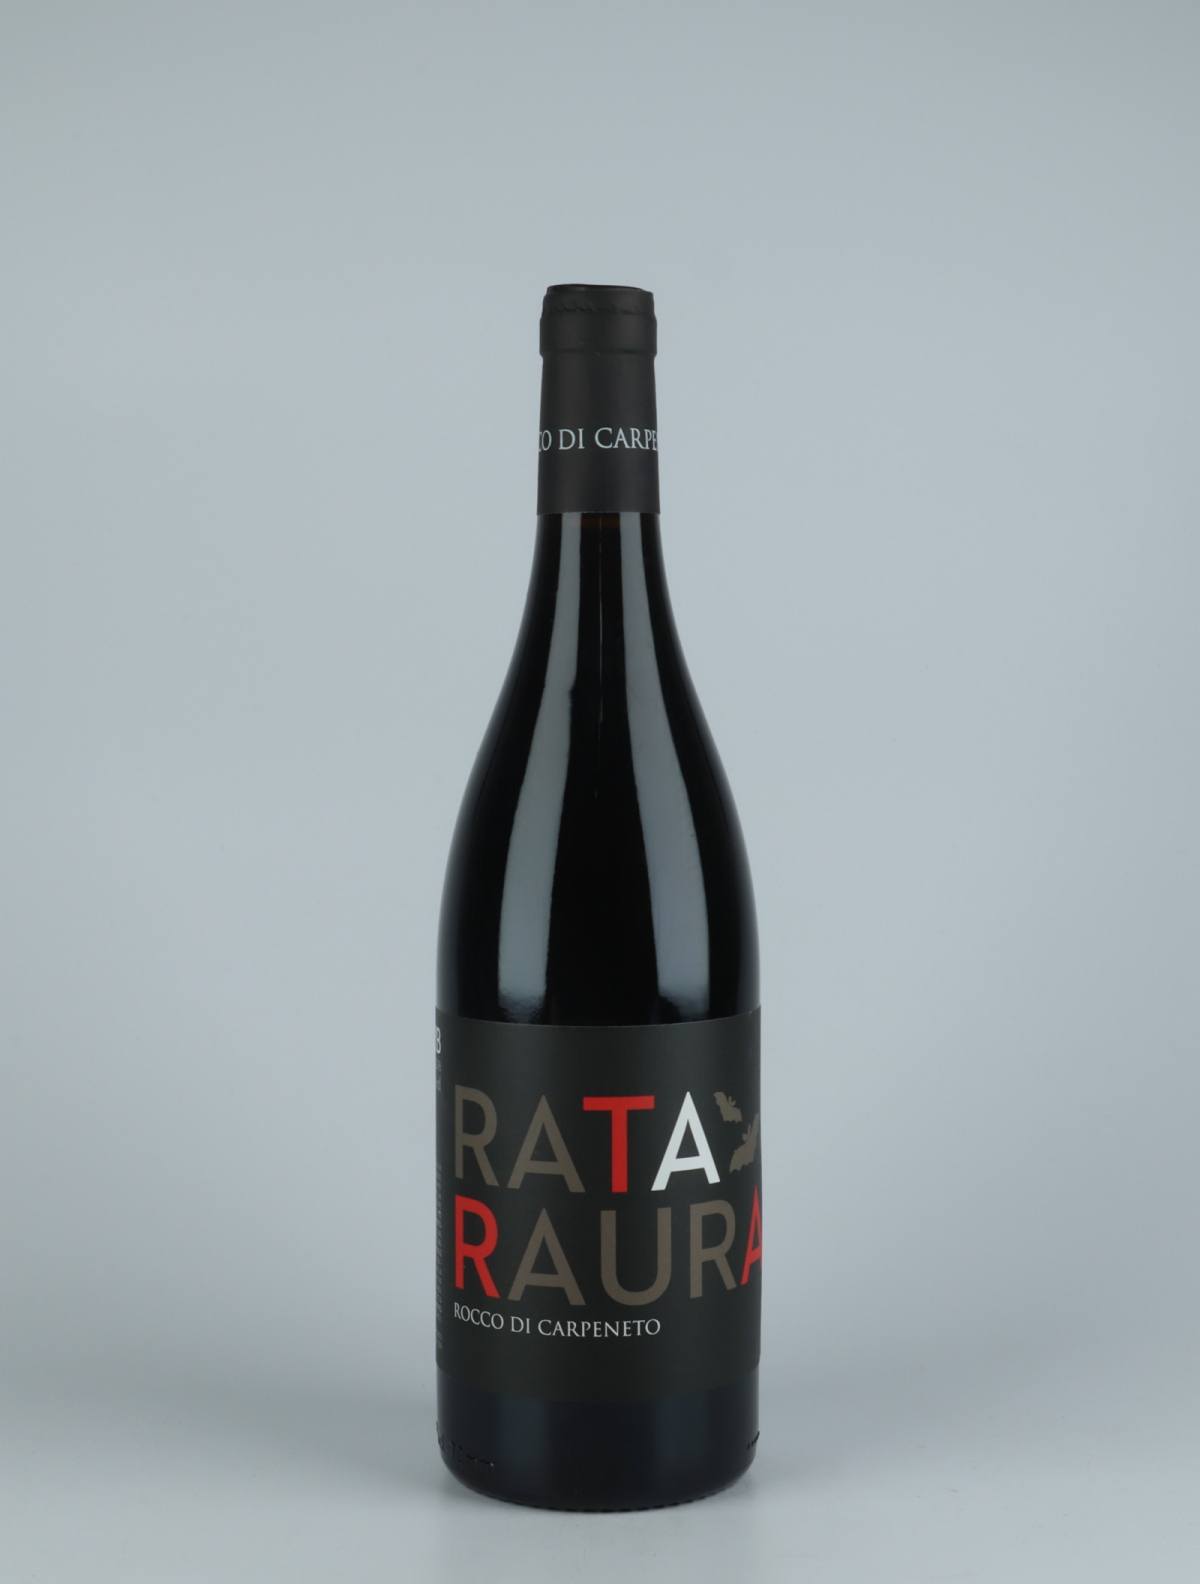 En flaske 2018 Rataraura Rødvin fra Rocco di Carpeneto, Piemonte i Italien